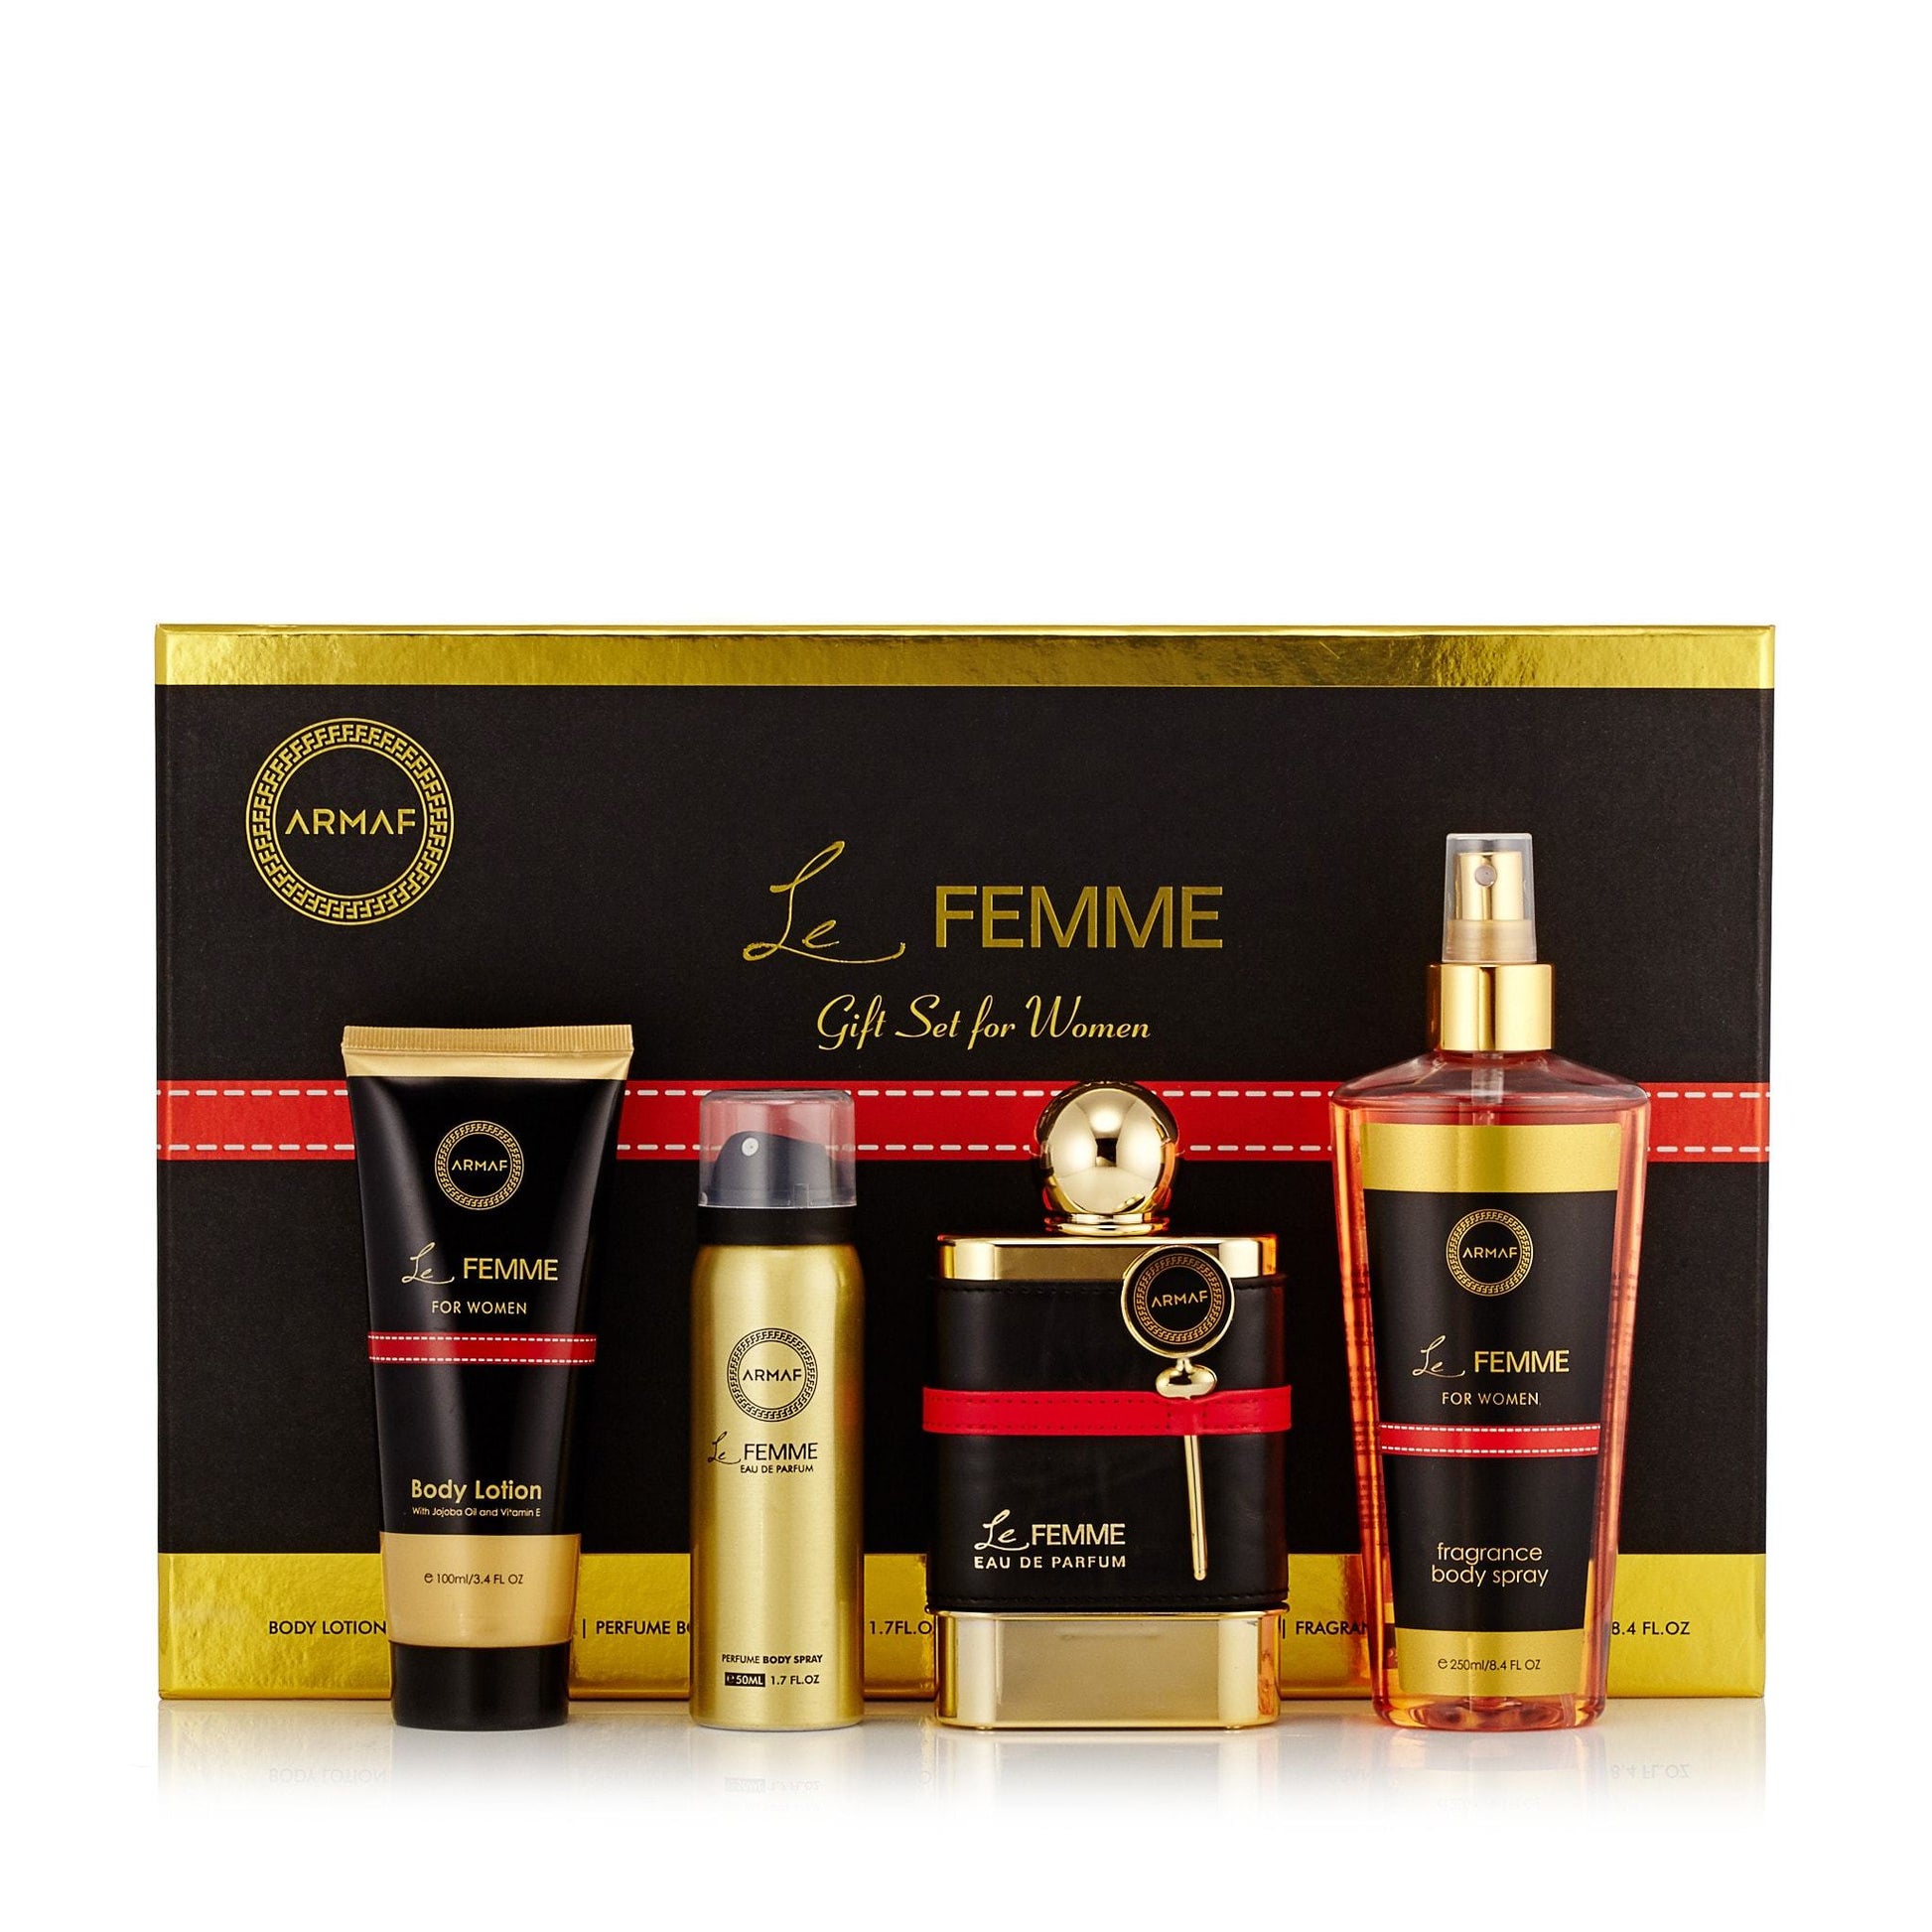 Le Femme Gift Set for Women, Product image 2